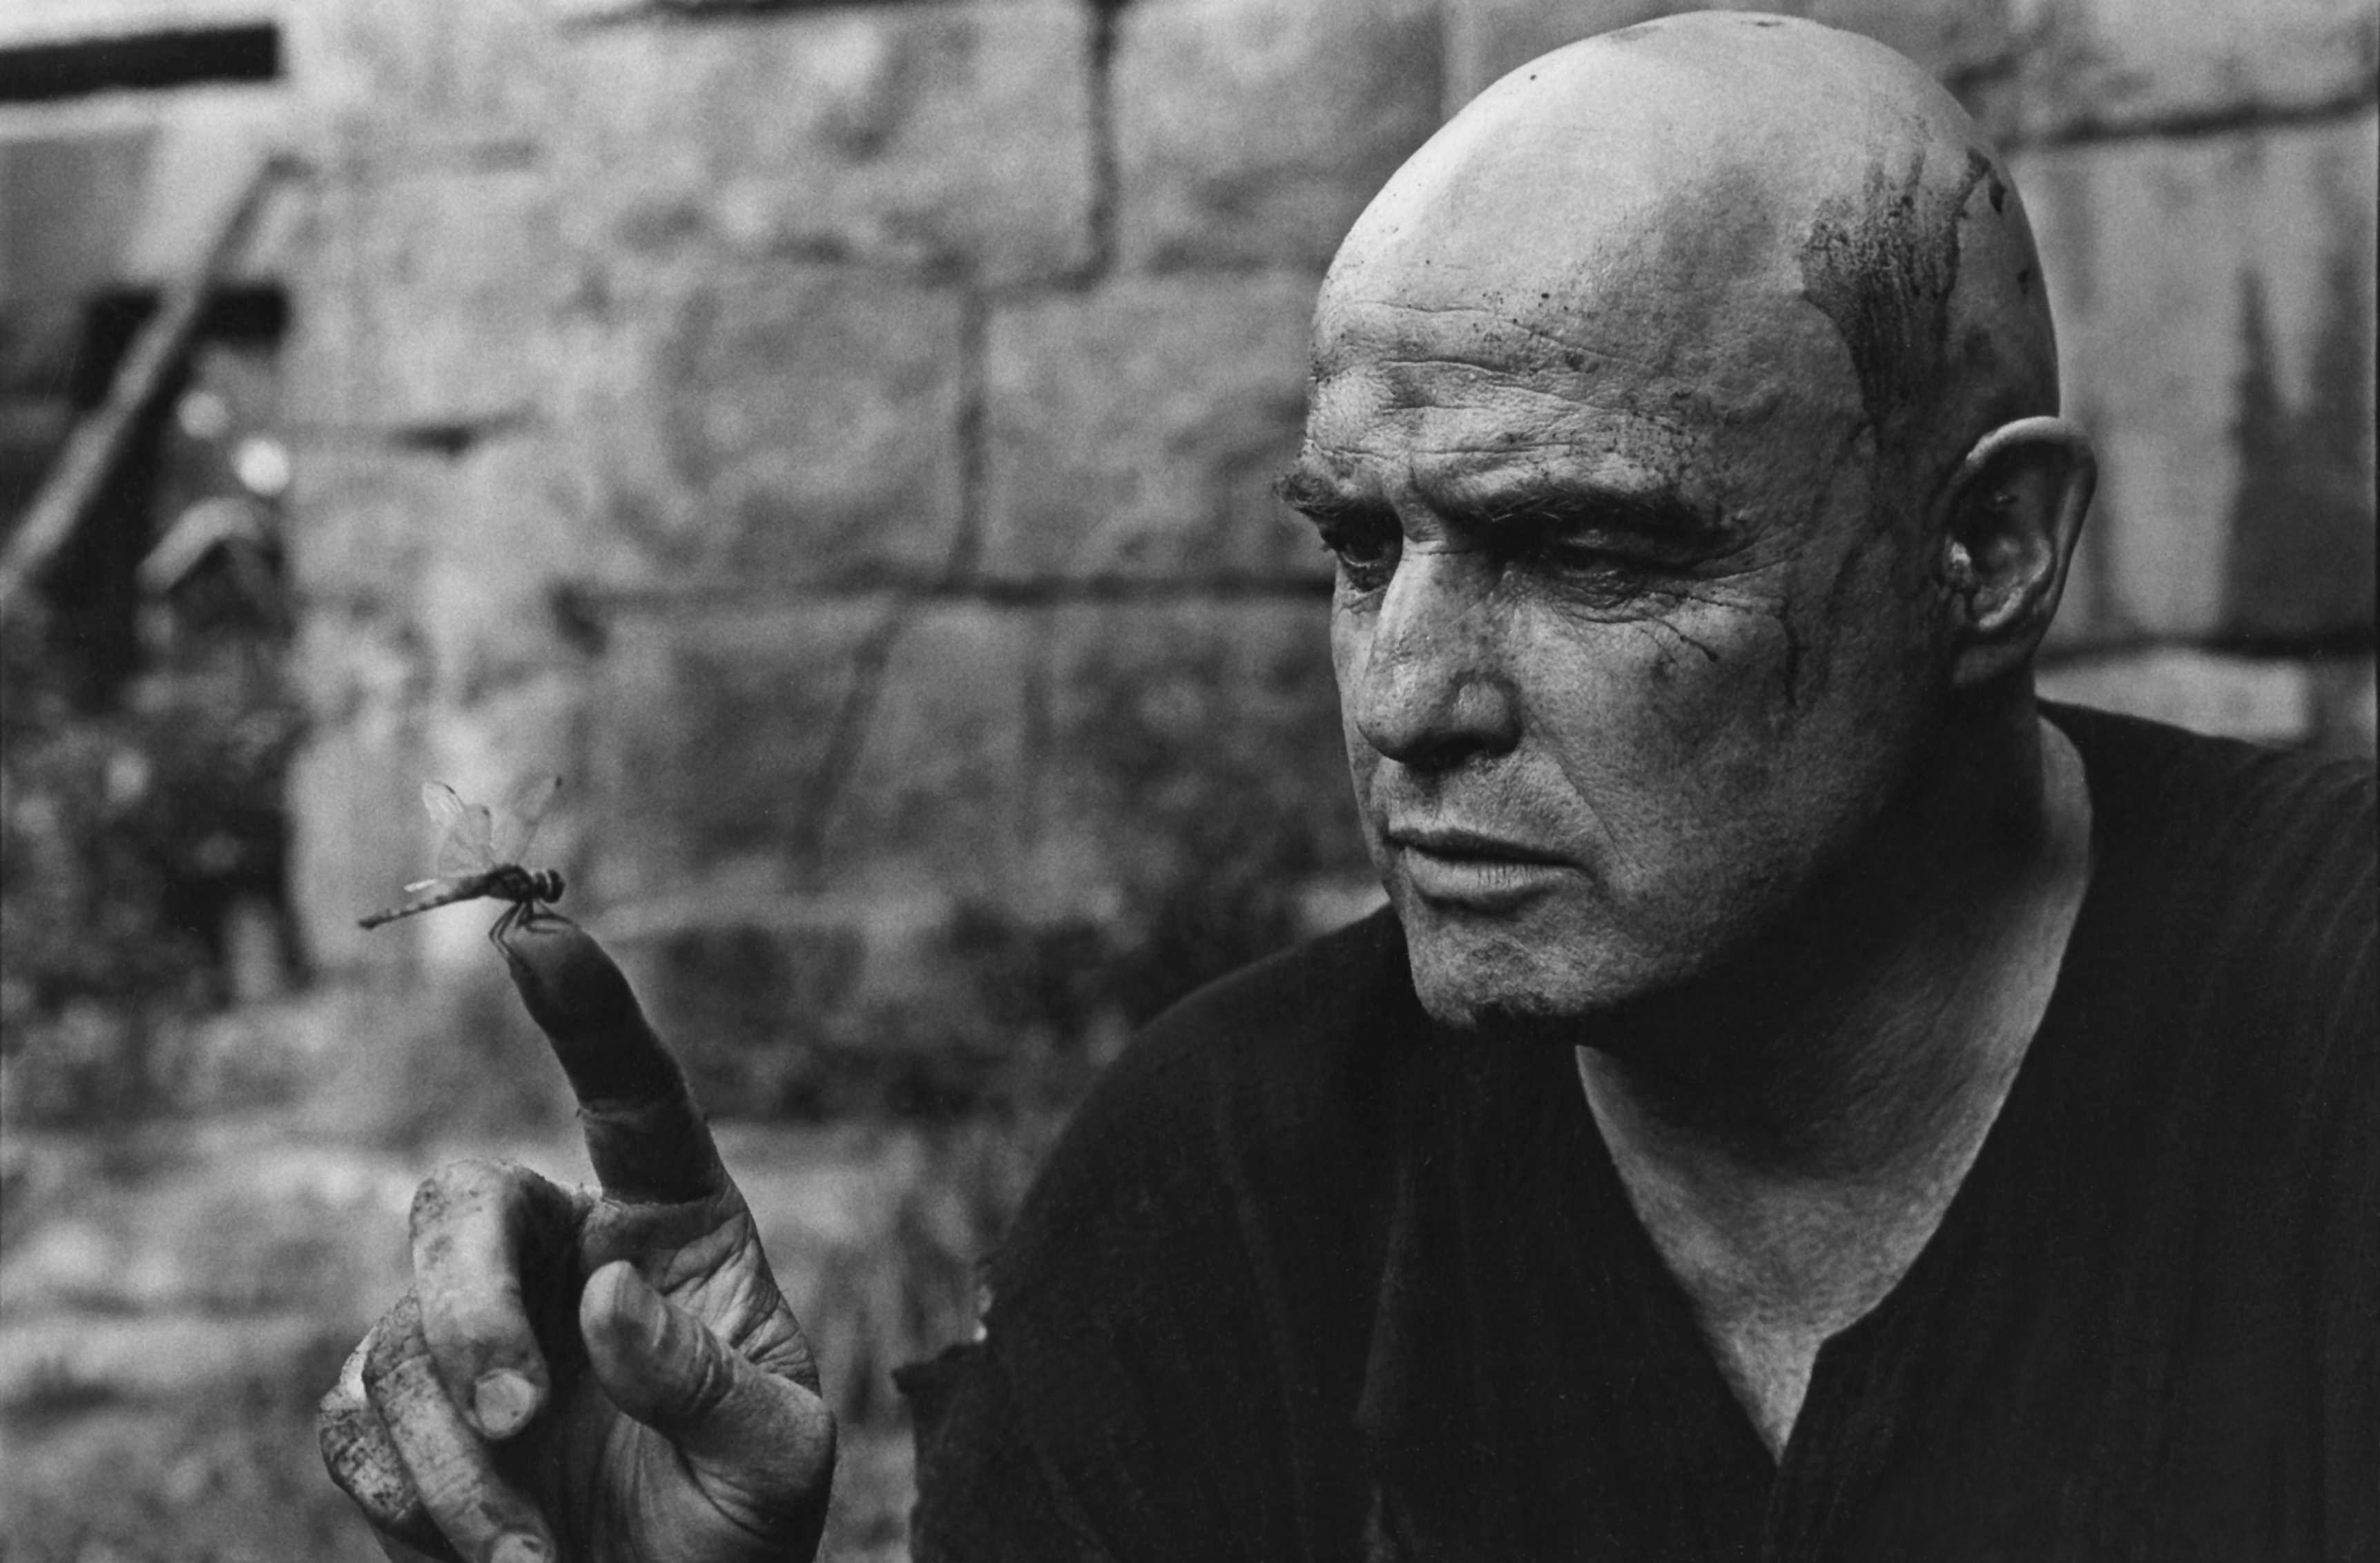 Apocalypse Now - Colonel Walter E. Kurtz, portrayed by Marlon Brando